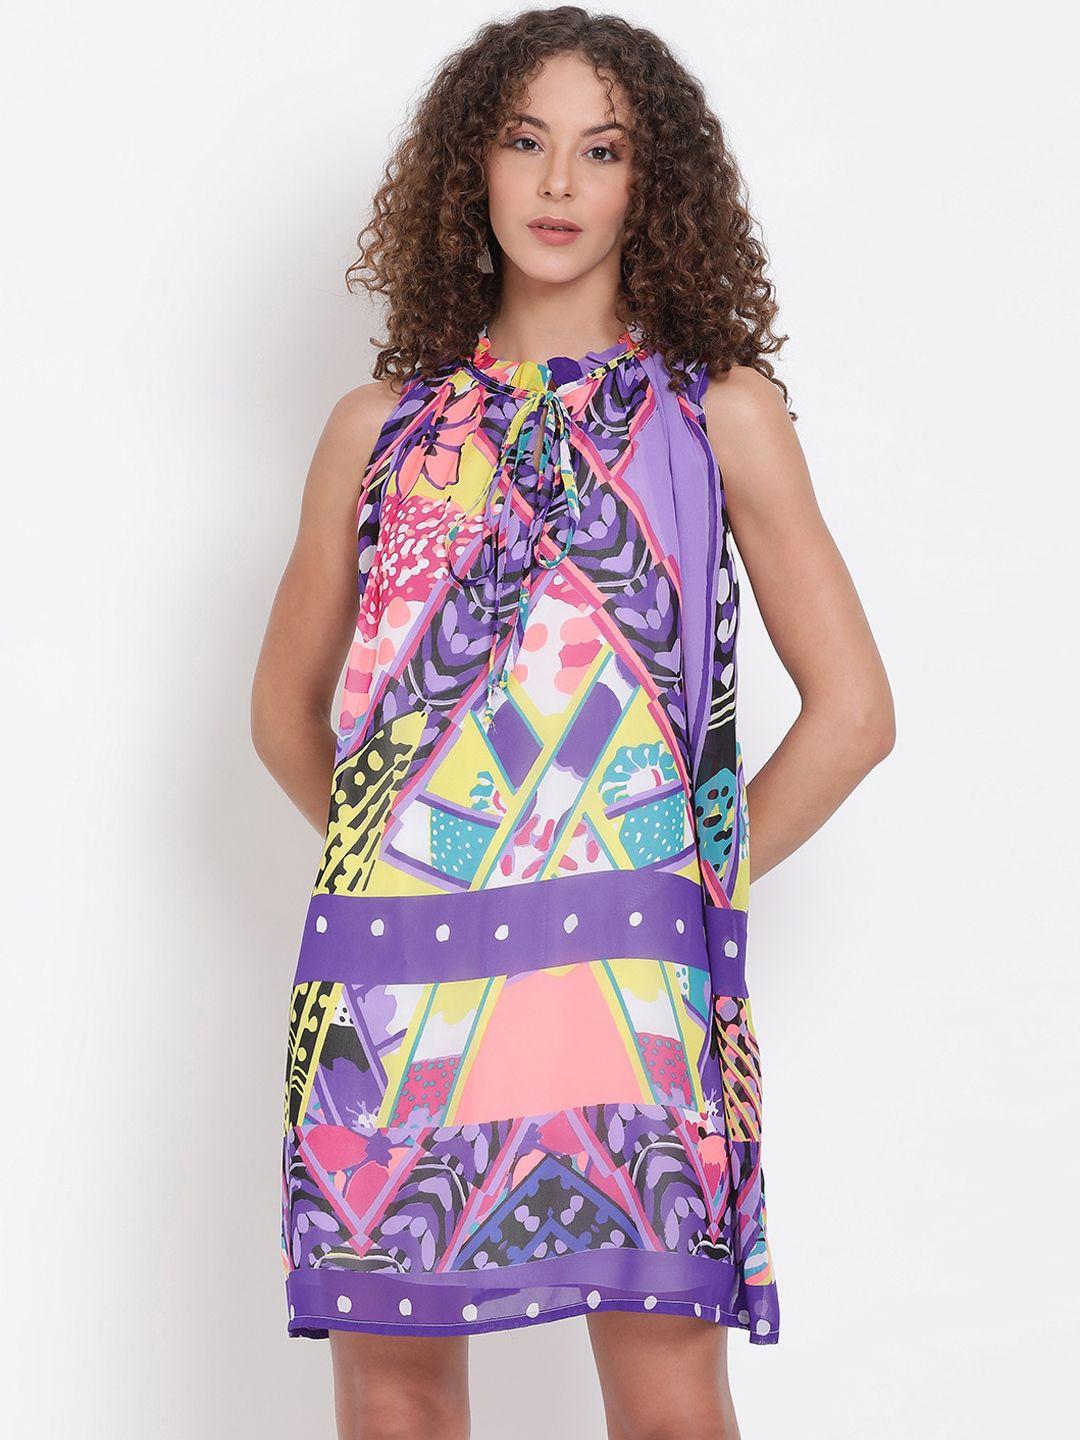 oxolloxo women purple printed a-line dress